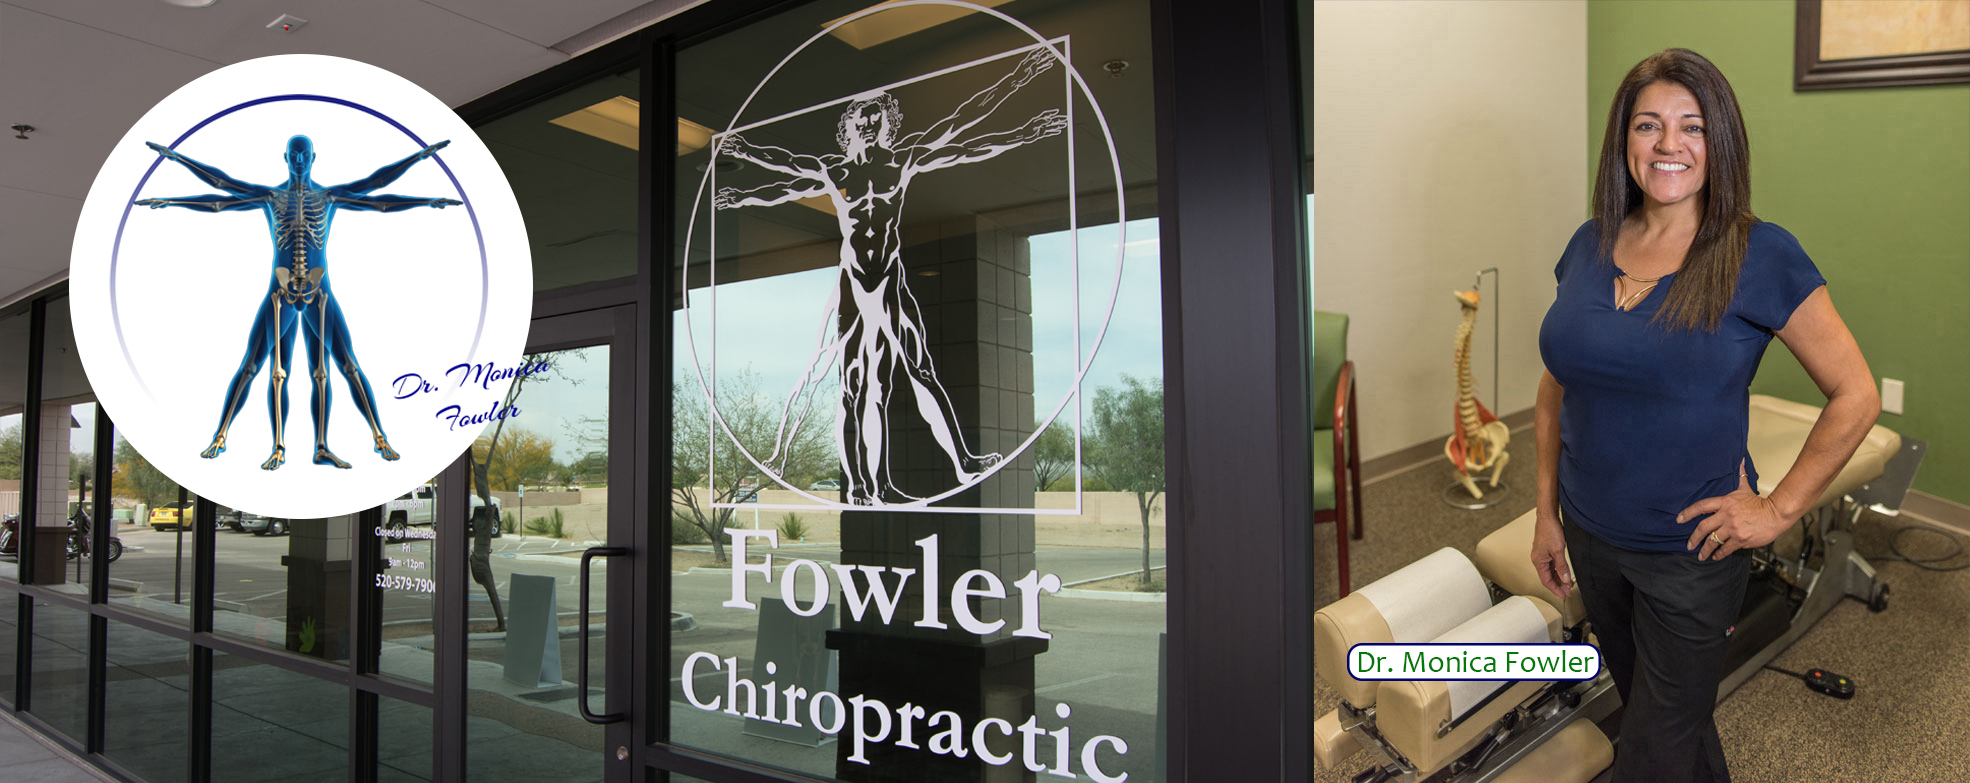 Fowler Chiropractic